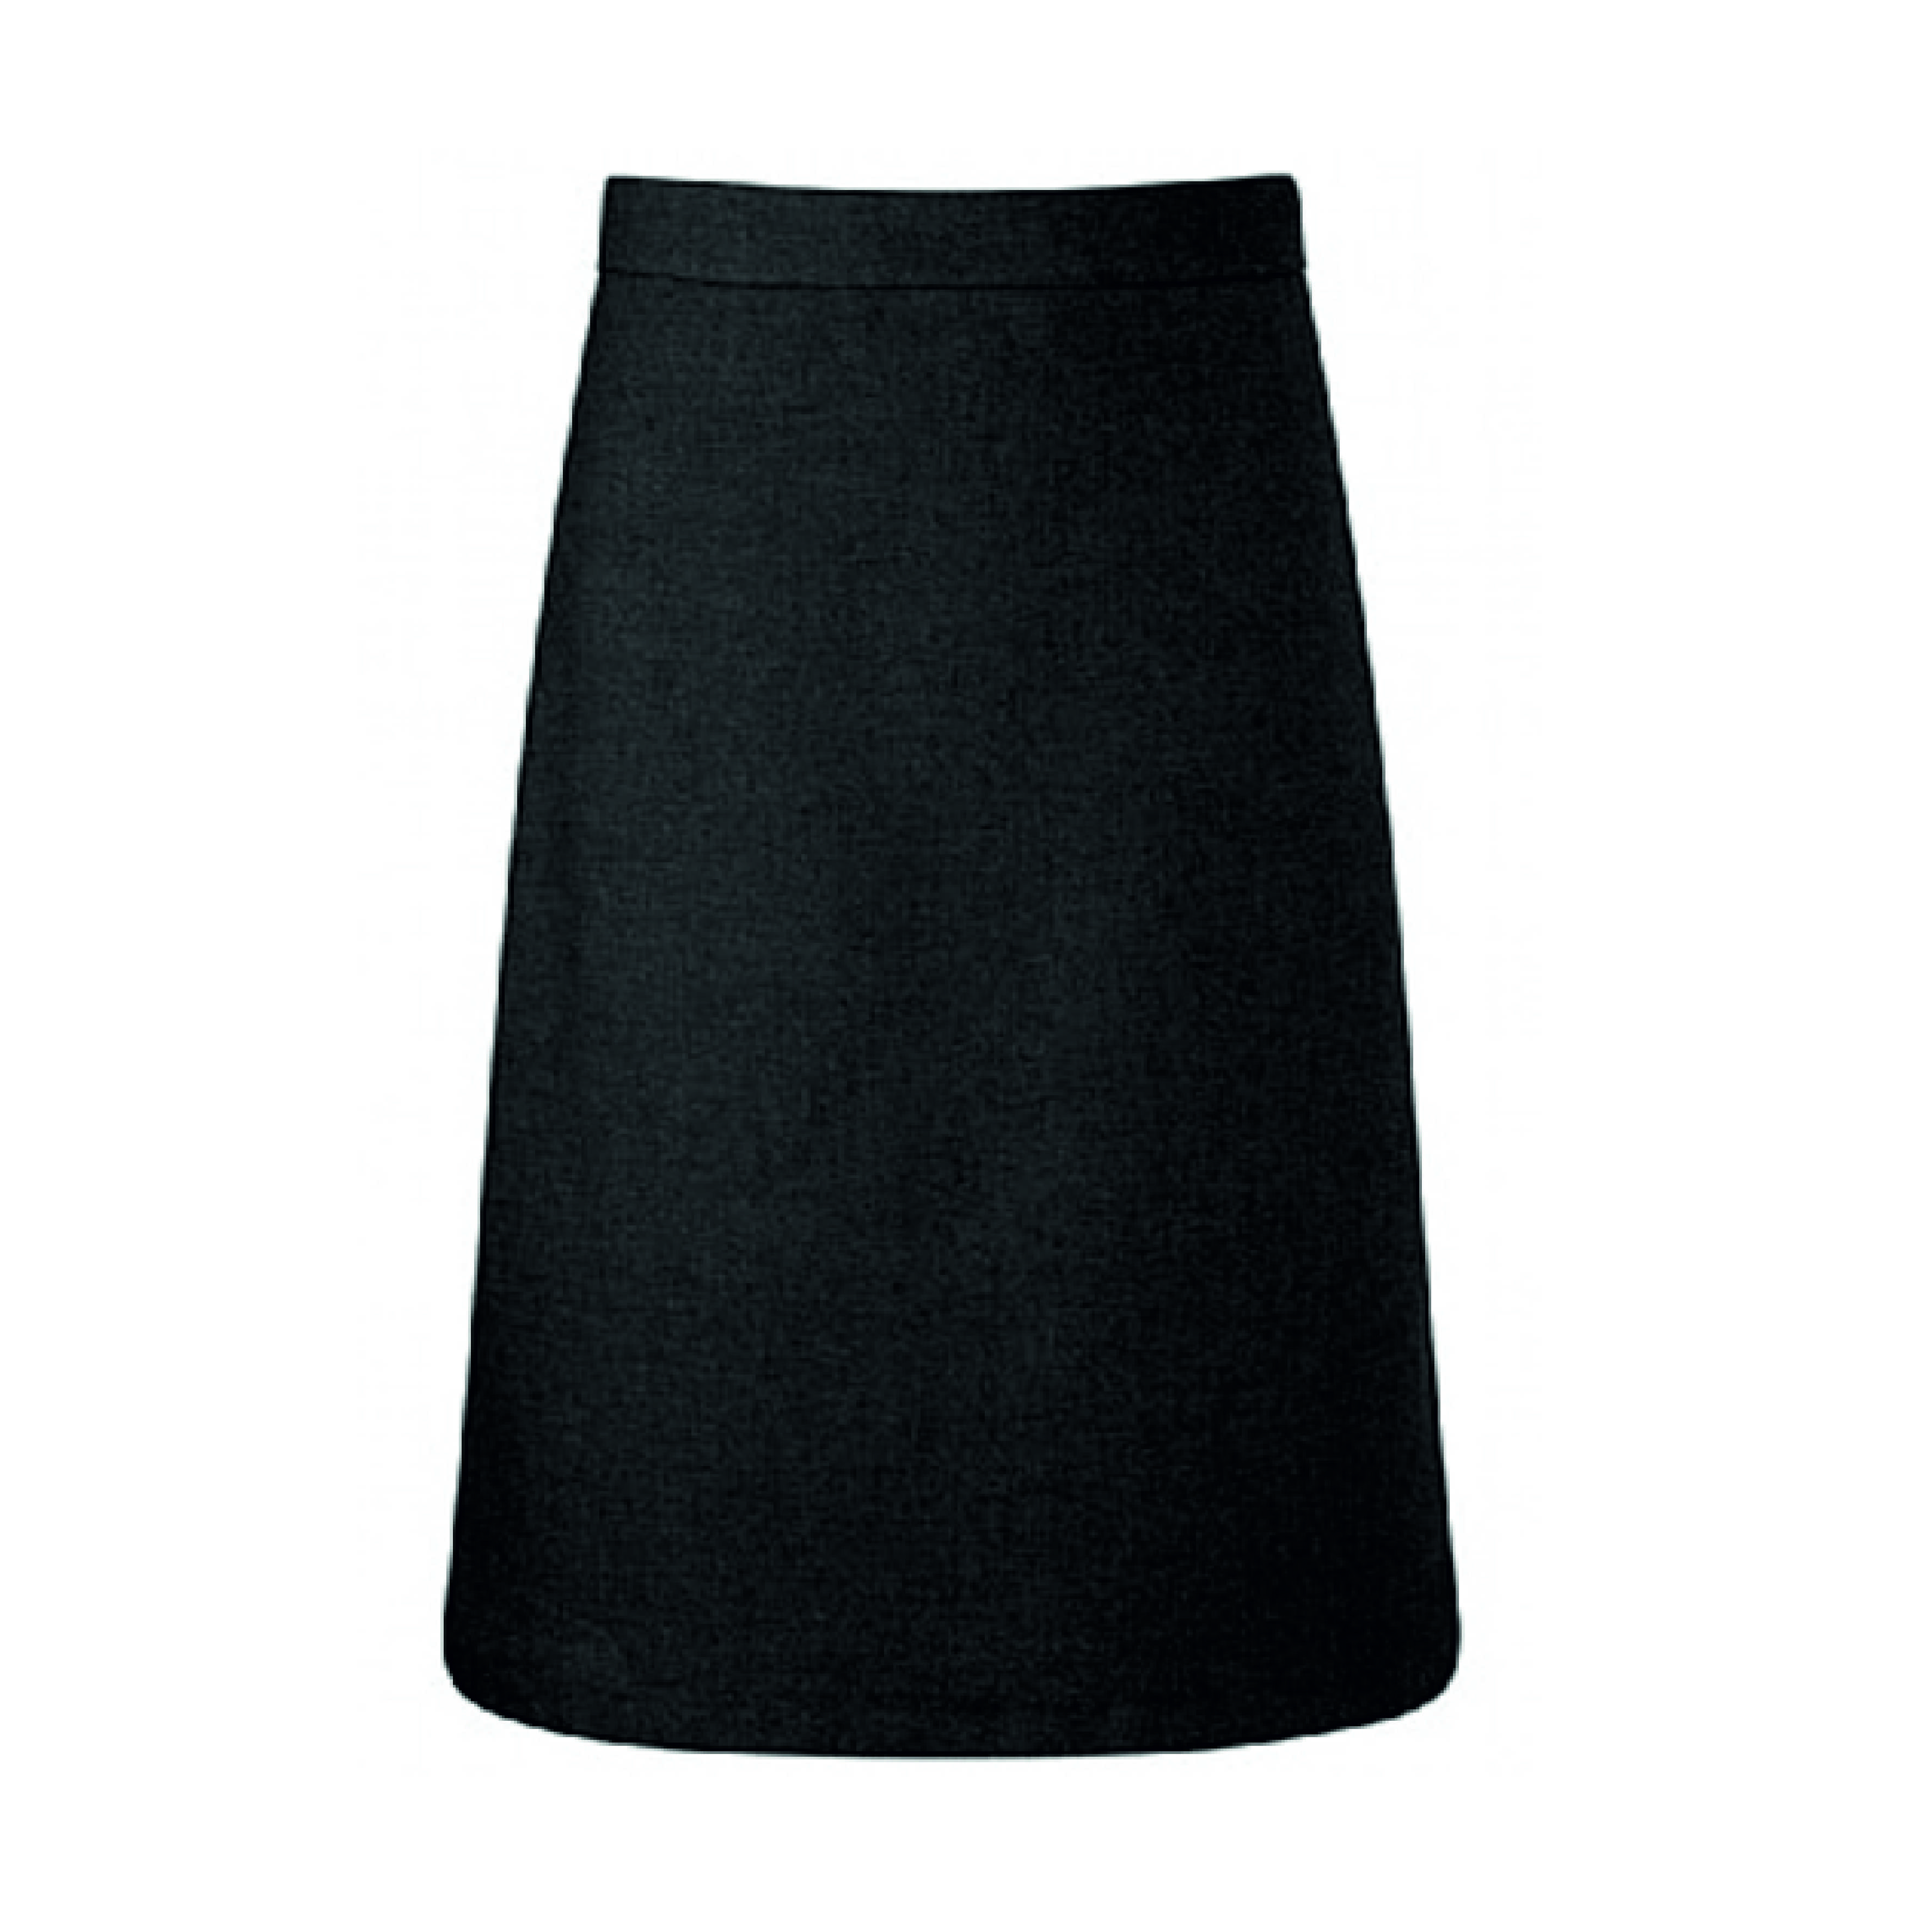 SSK242 Girls Black Skirt - Schoolwear Solutions